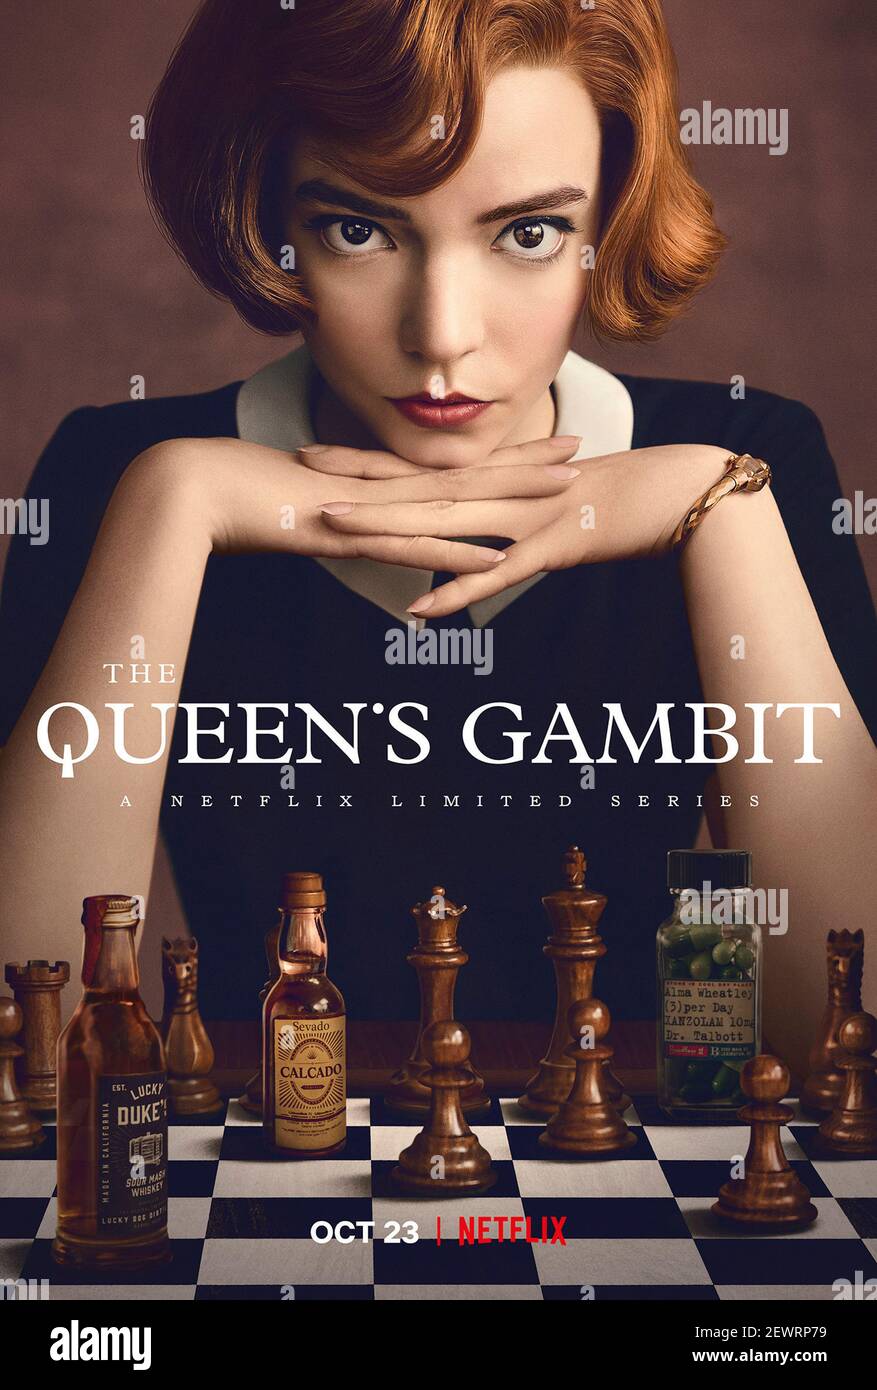 Queen's Gambit Images – Browse 143 Stock Photos, Vectors, and